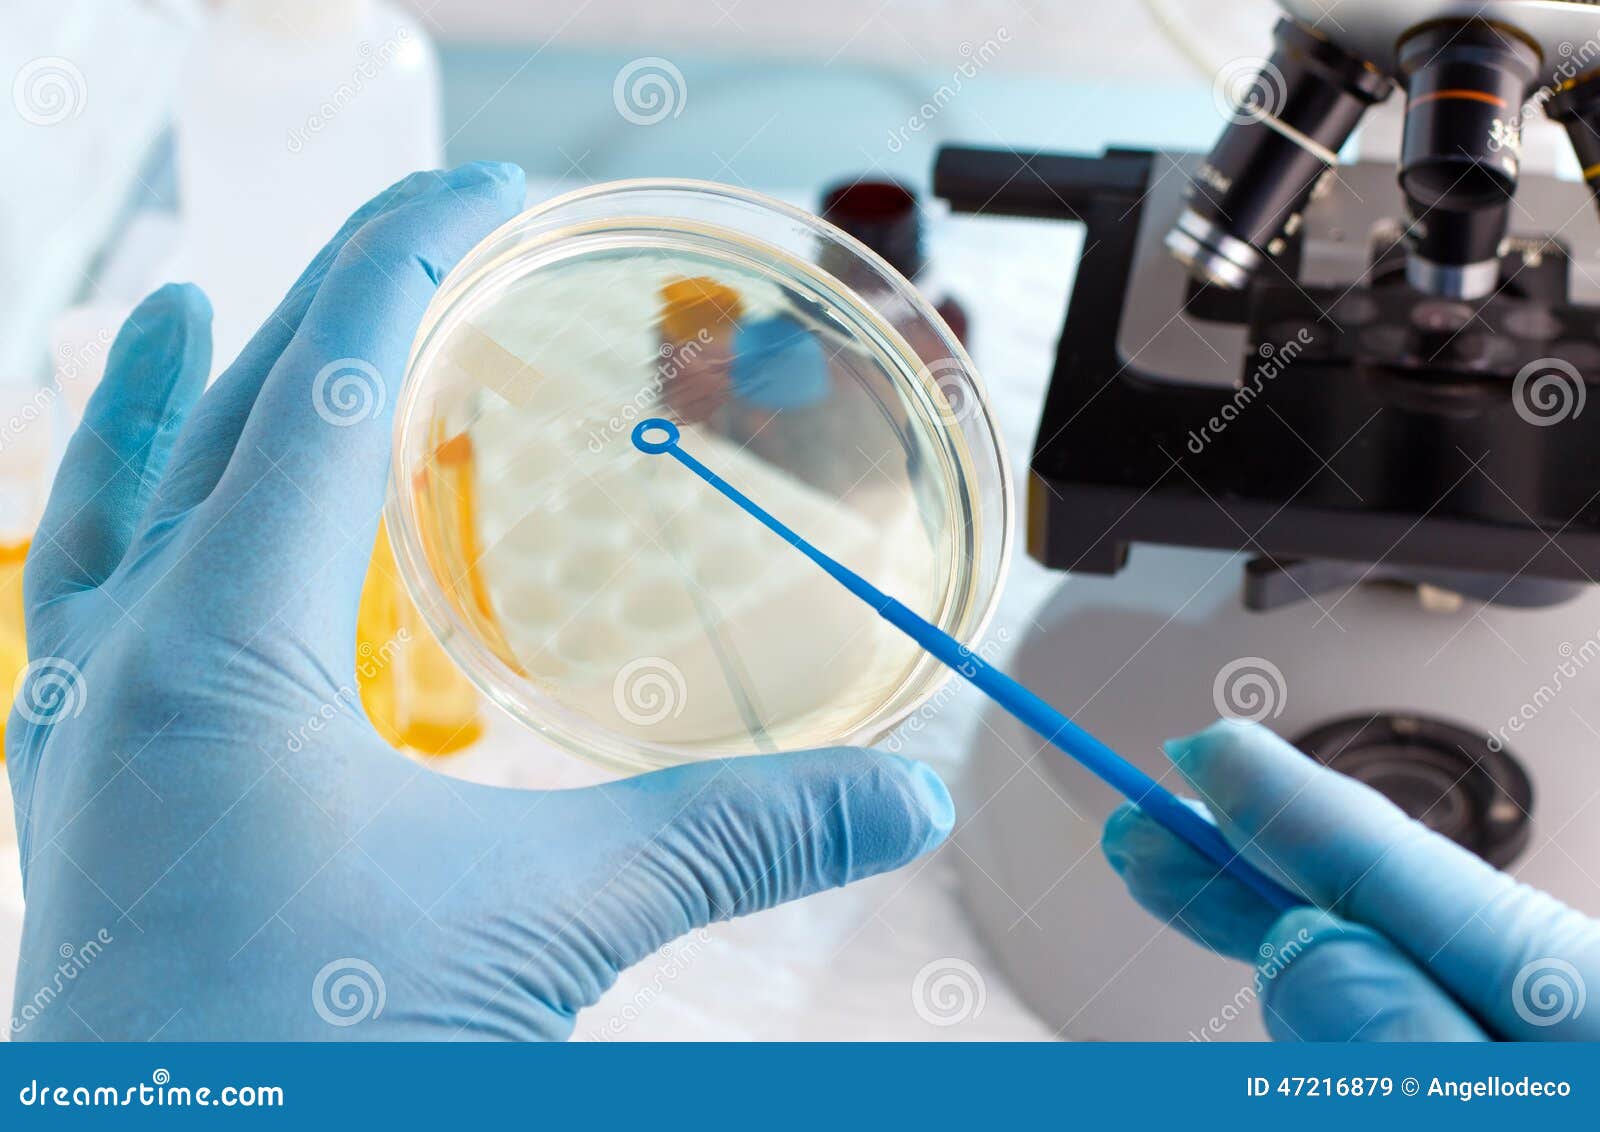 lab technician hand planting a petri dish